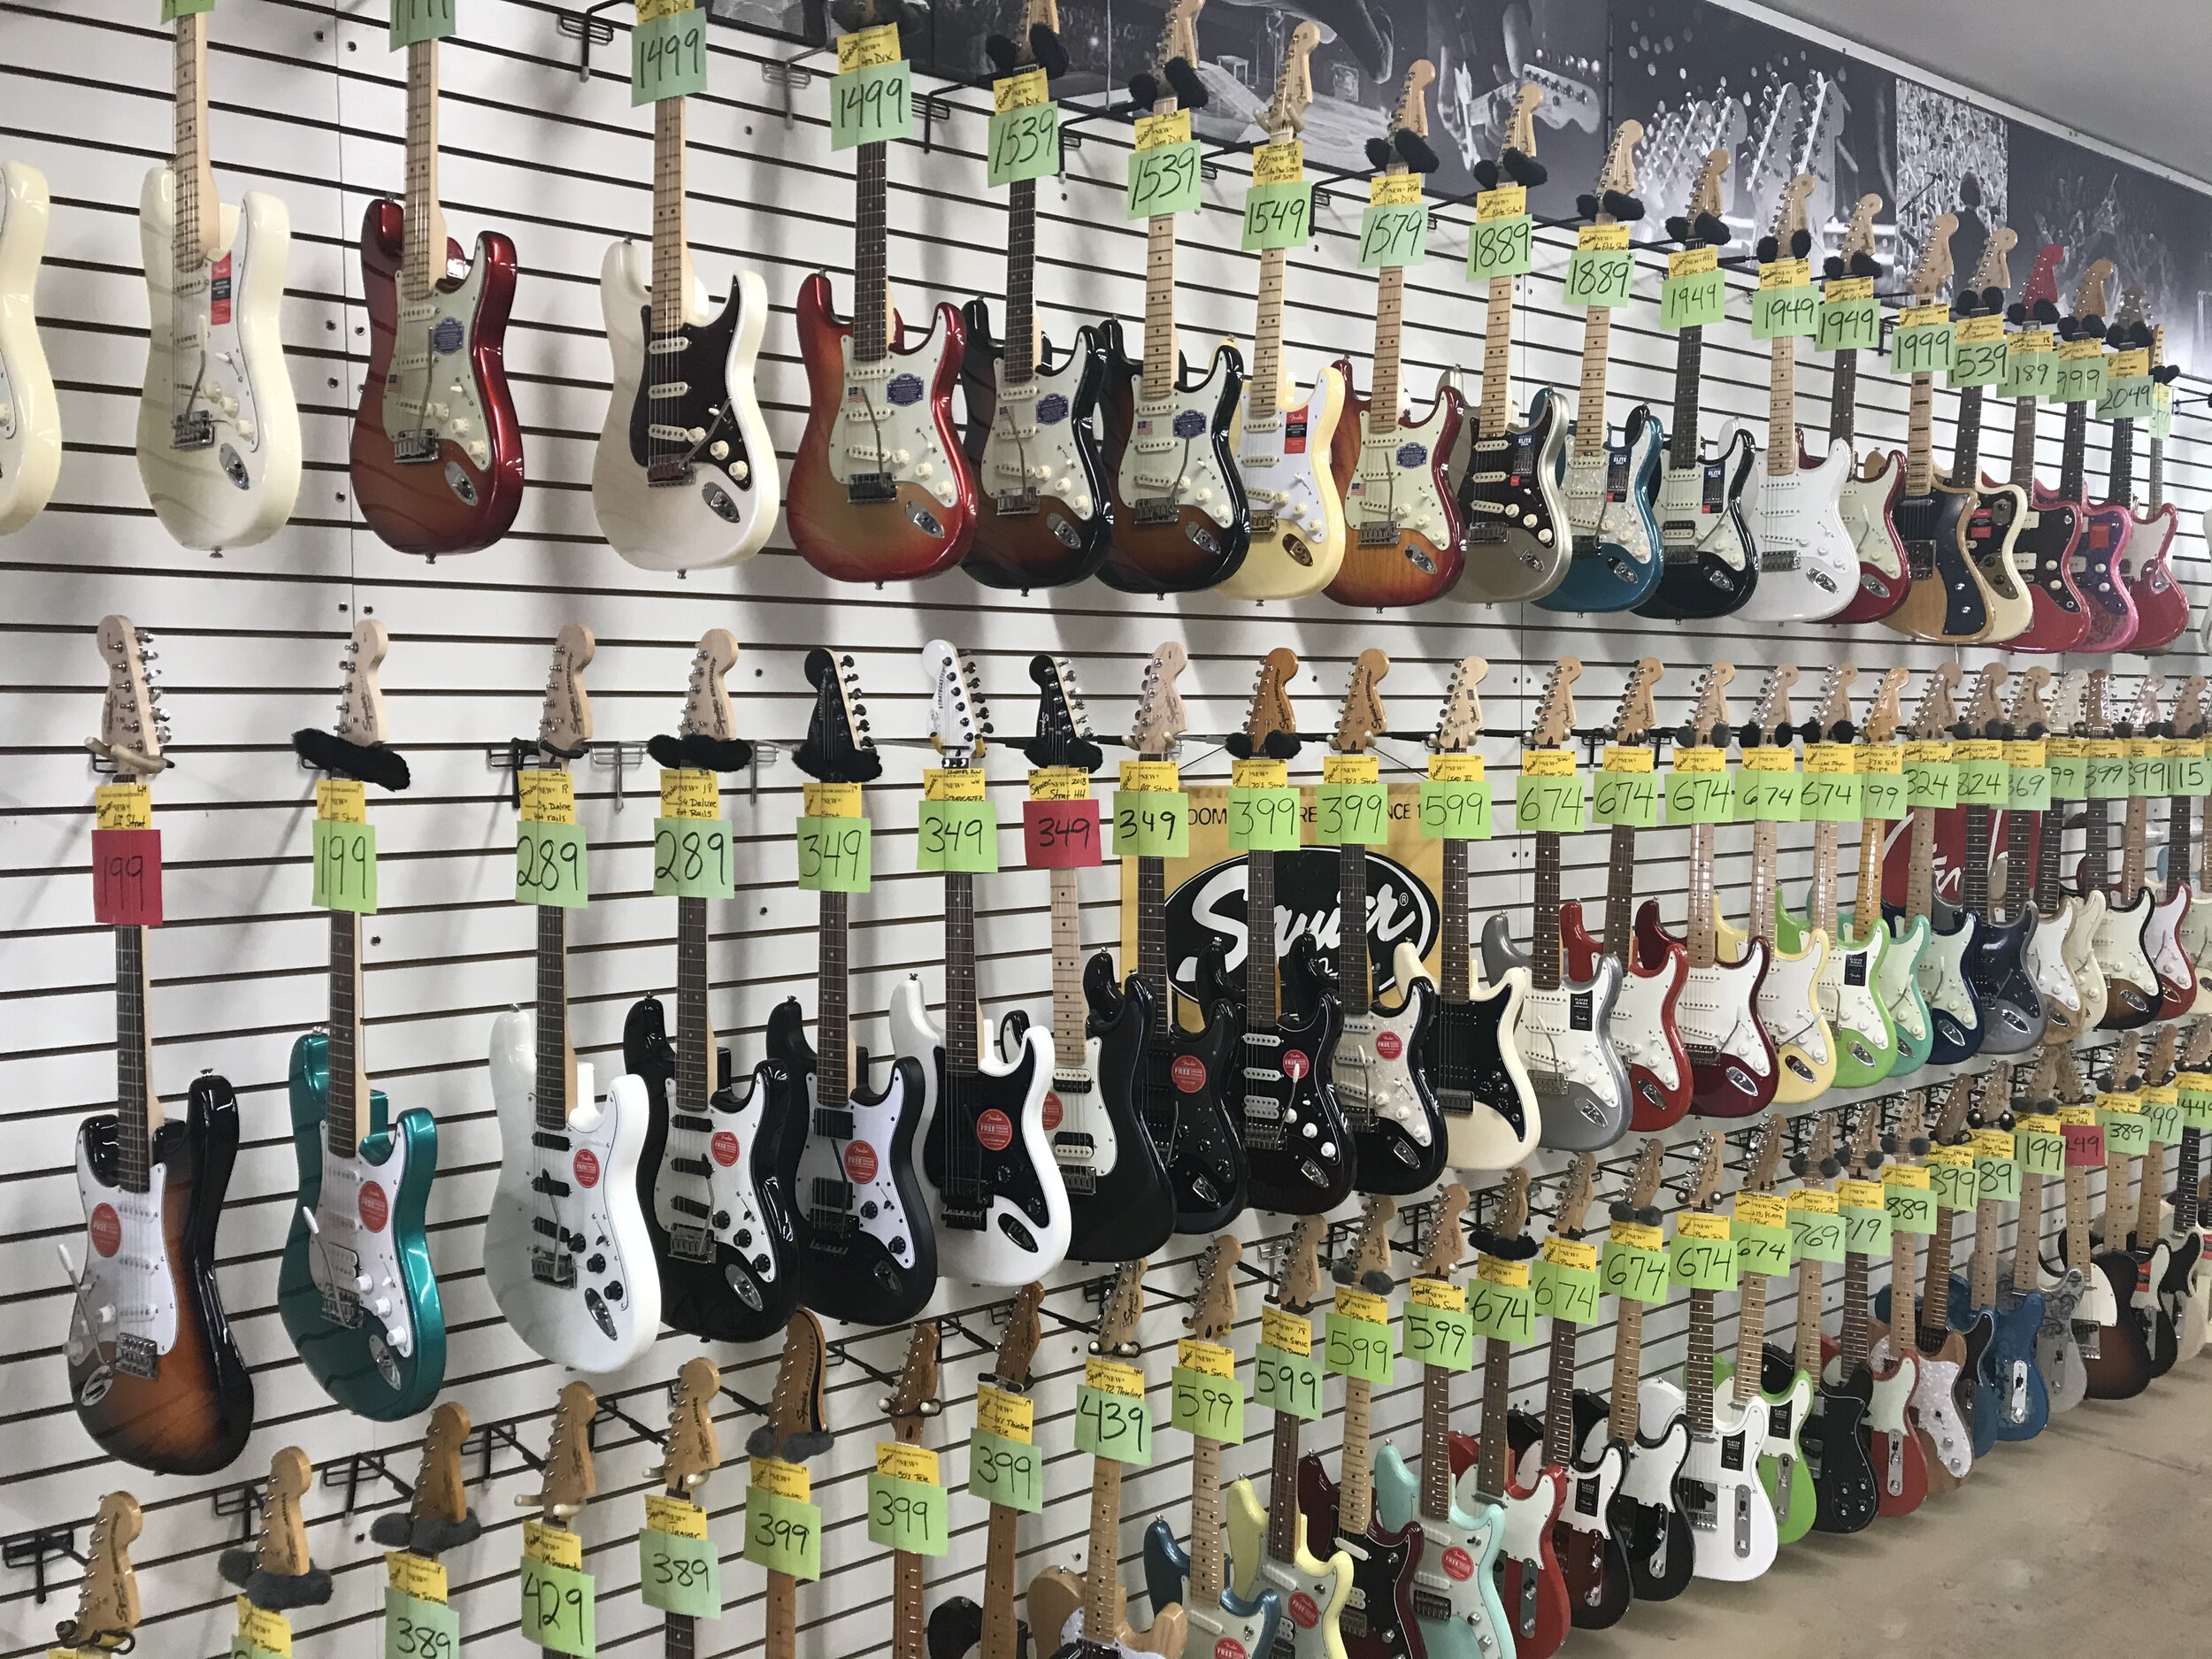 Fender Guitar Wall.jpg